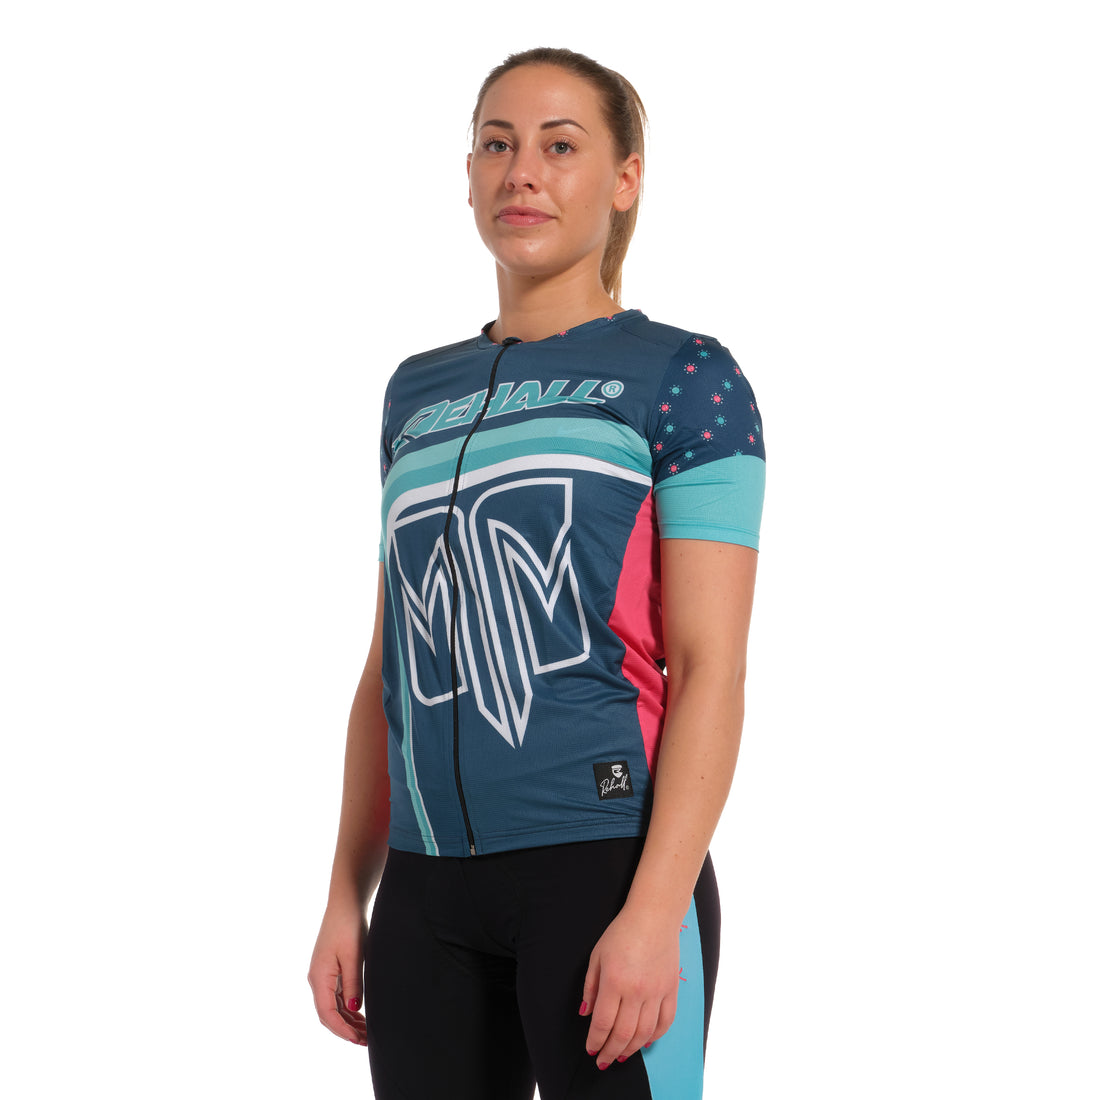 ROXANE-R Womens Bike T-Shirt Shortsleeve